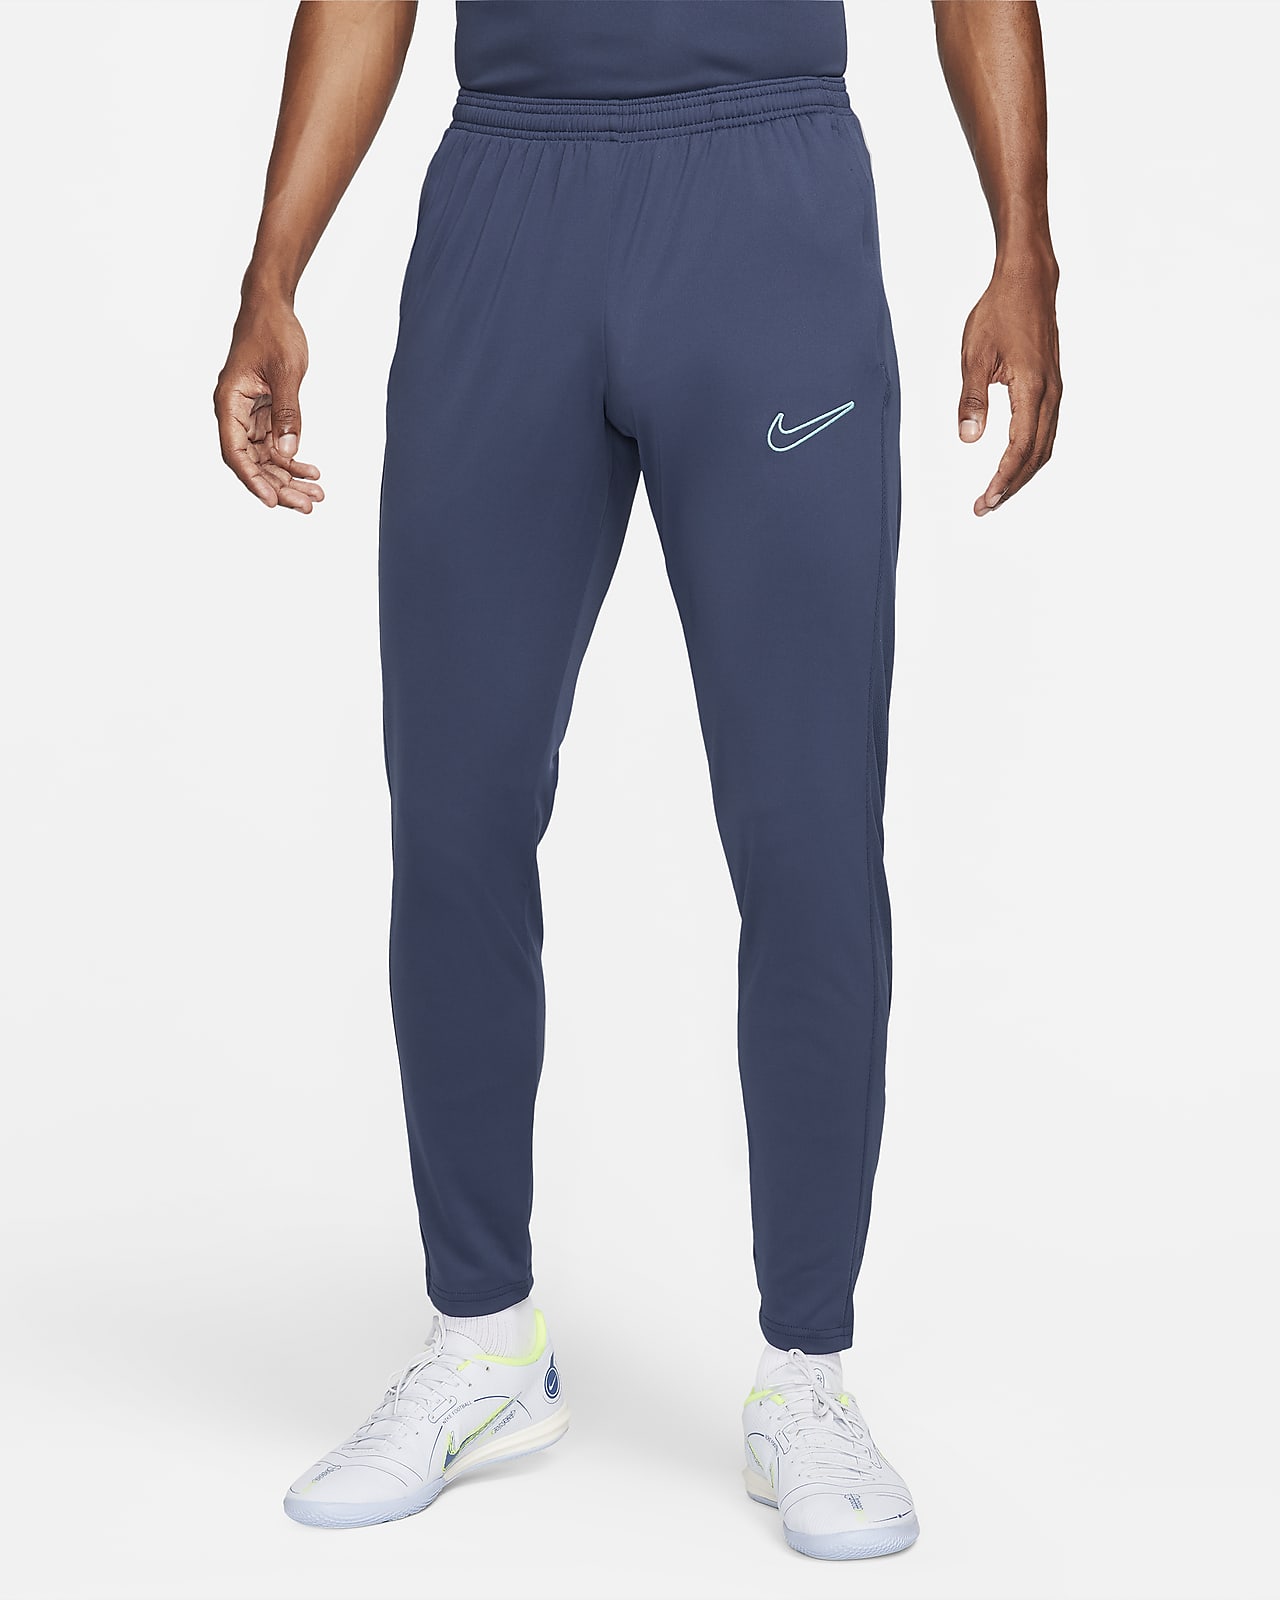 Mens Tracksuit Bottoms, adidas, Nike